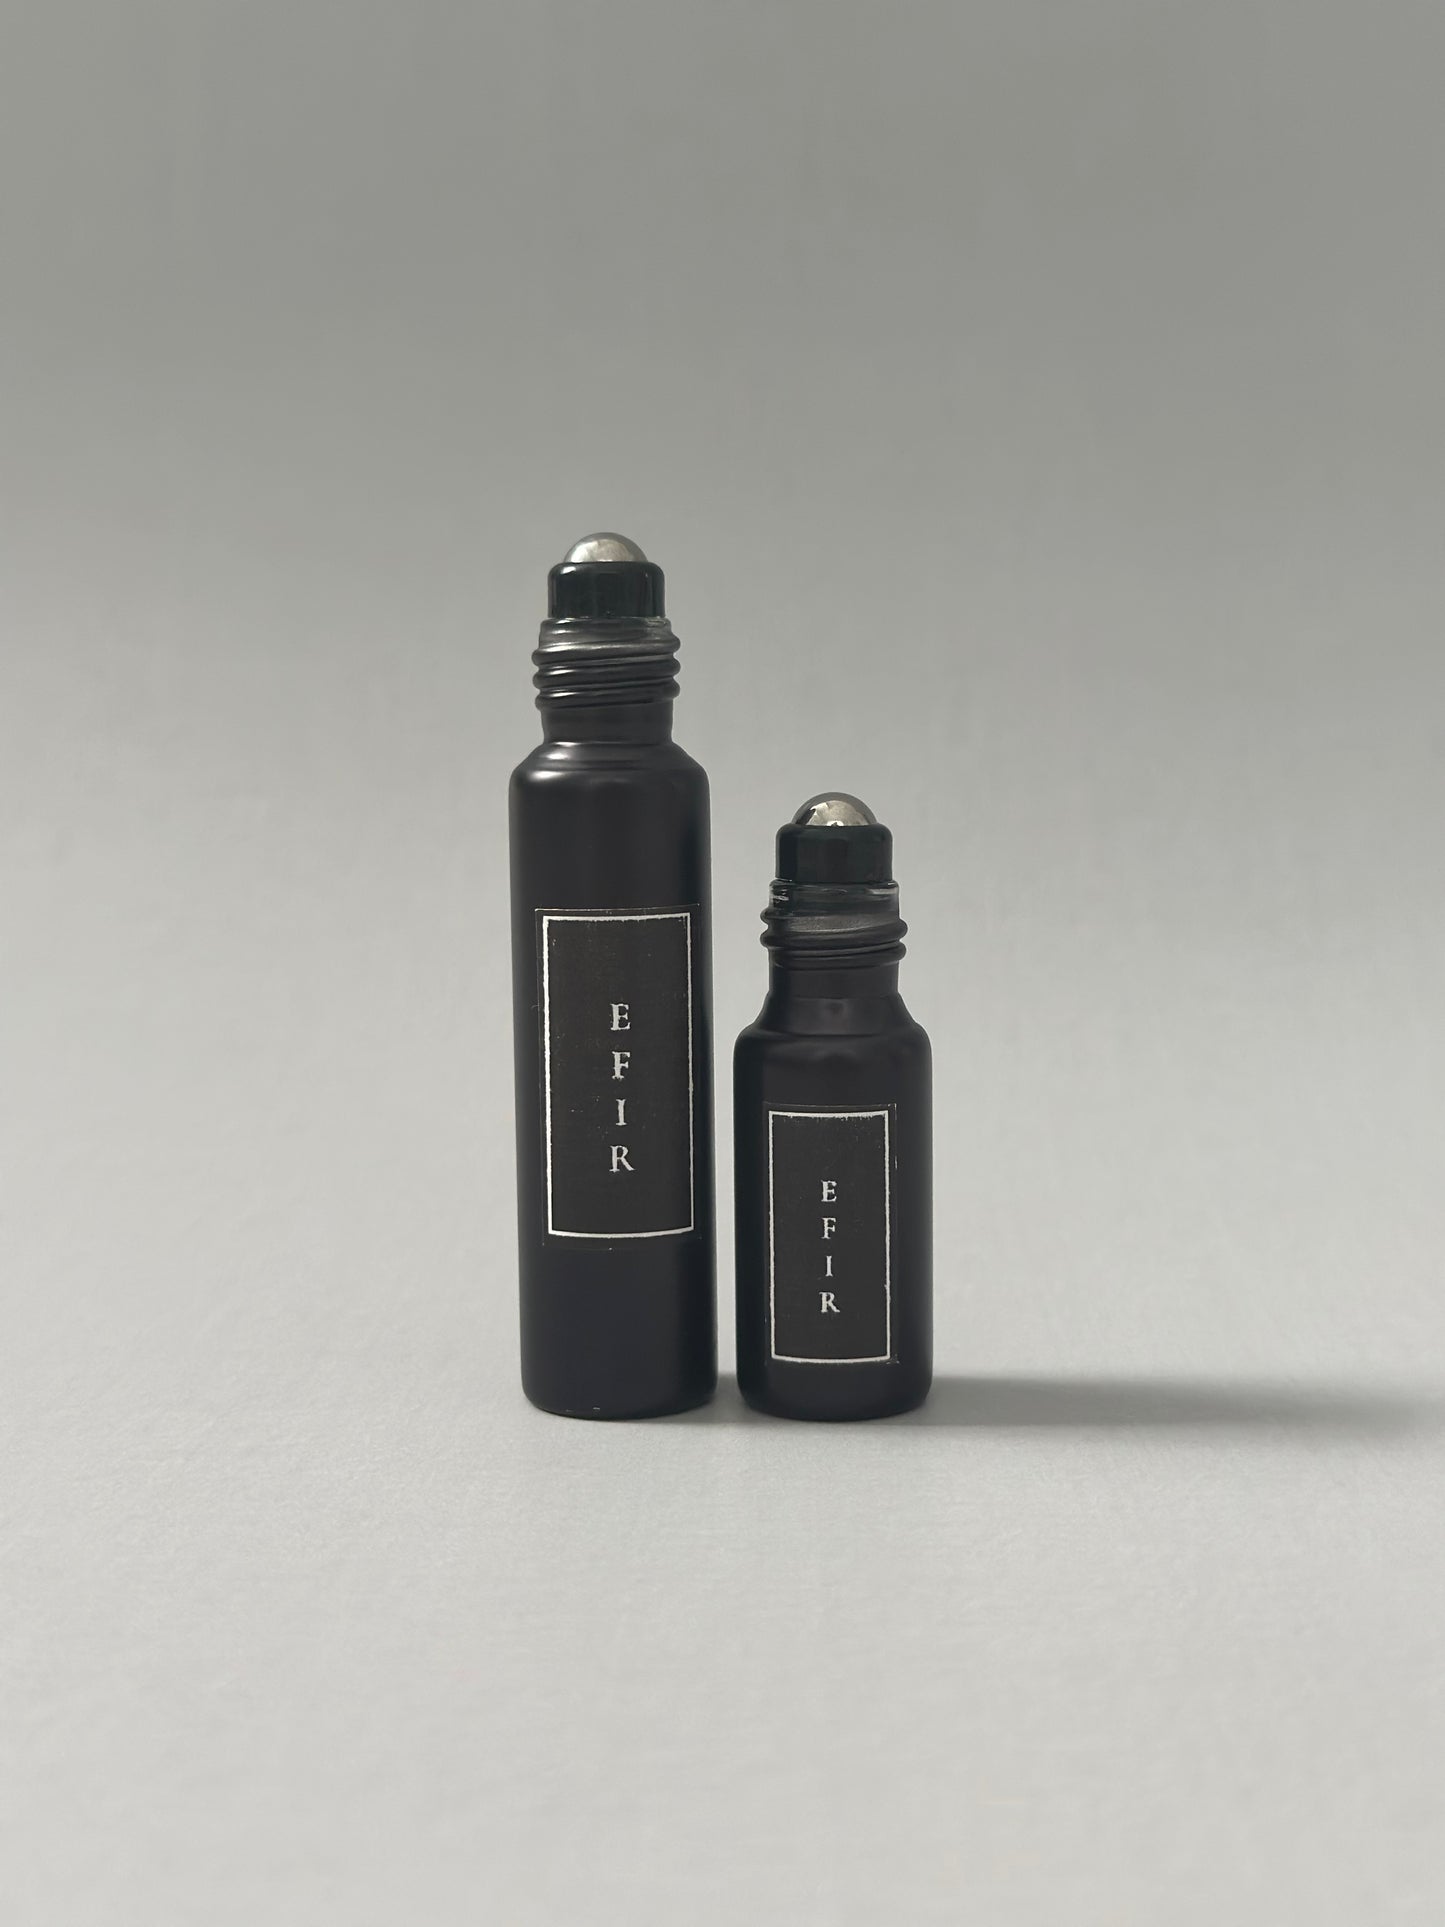 EFIR | Oil Parfum - pomegranate, benzoin, labdanum, amber